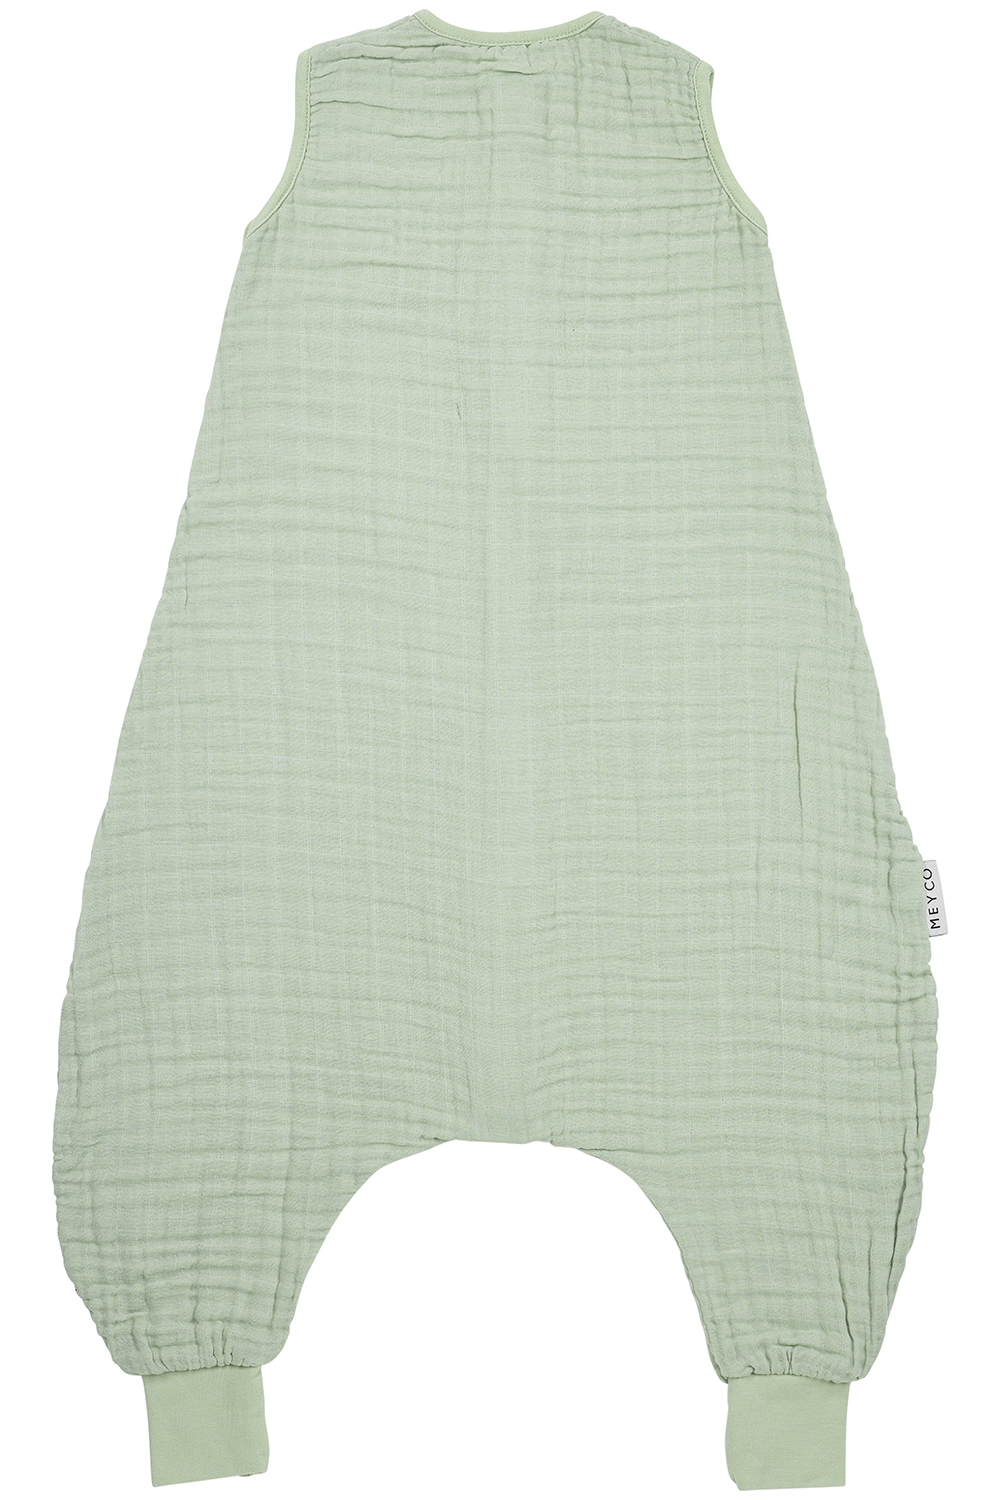 Baby zomer slaapoverall jumper pre-washed hydrofiel Uni - soft green - 92cm